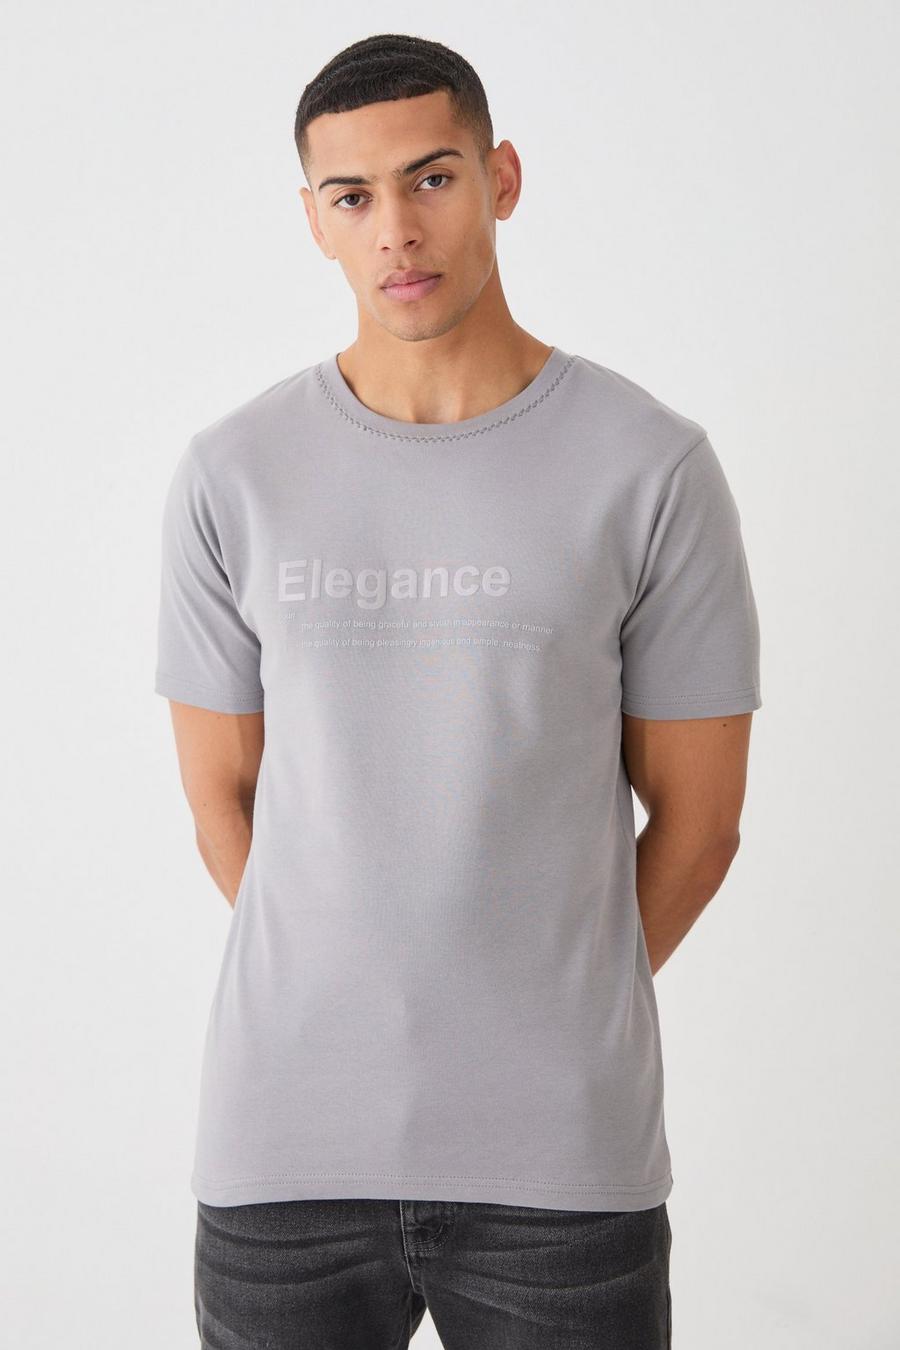 T-Shirt mit Elegance Print, Charcoal